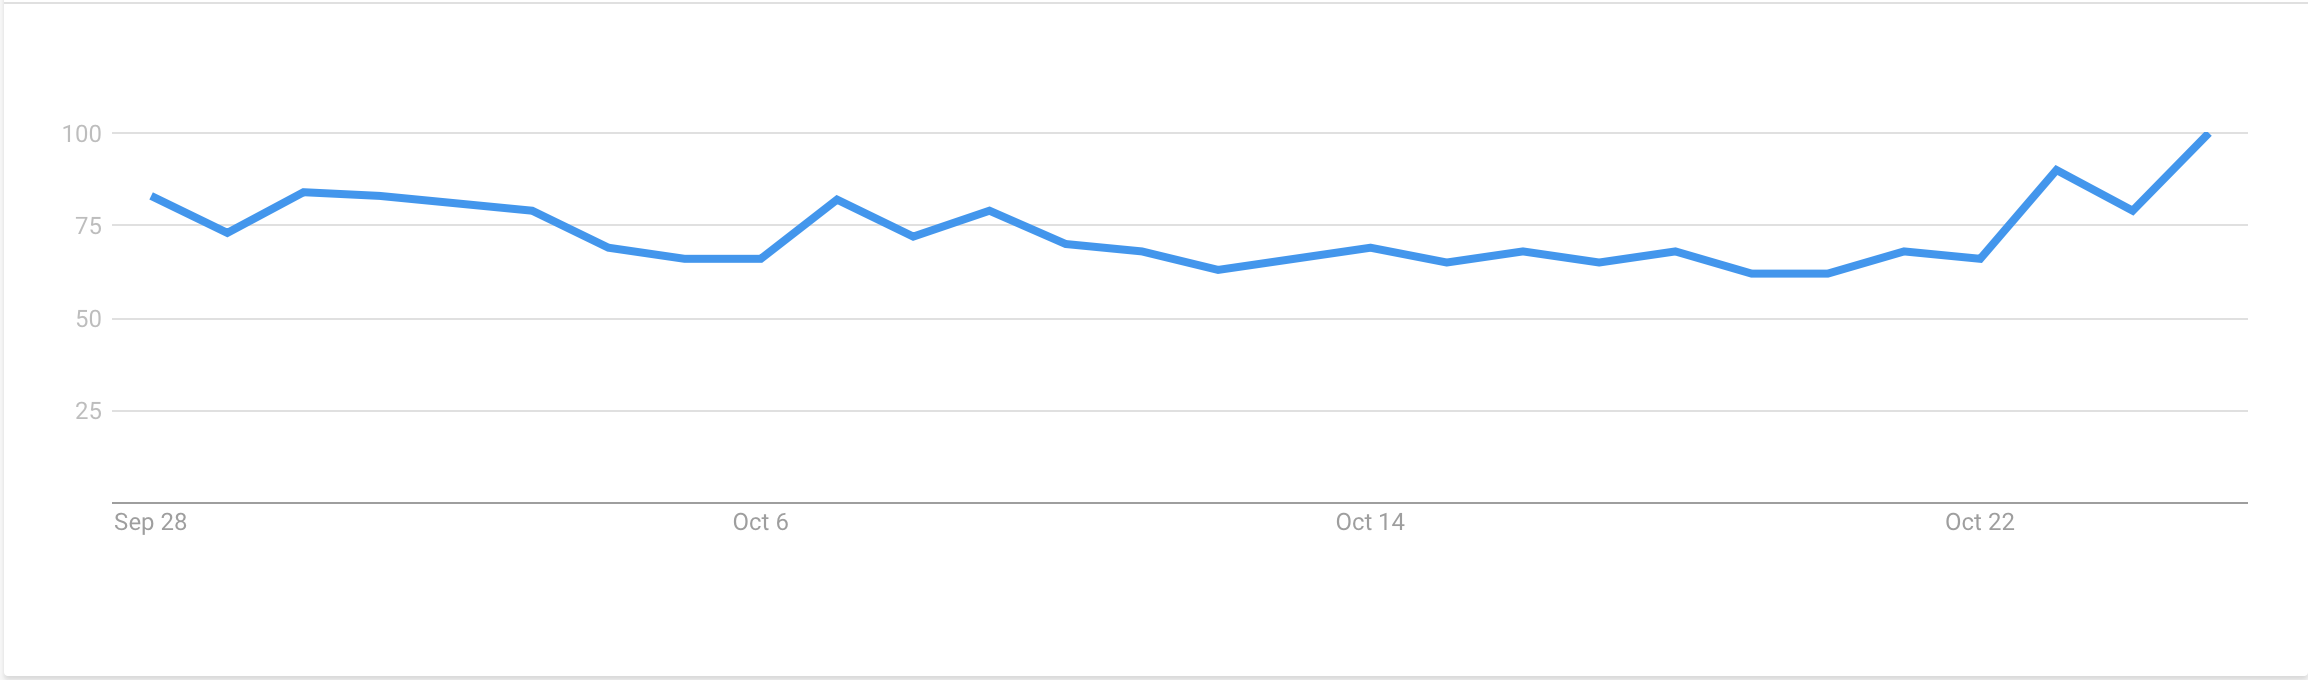 Google search interest in bitcoin rising